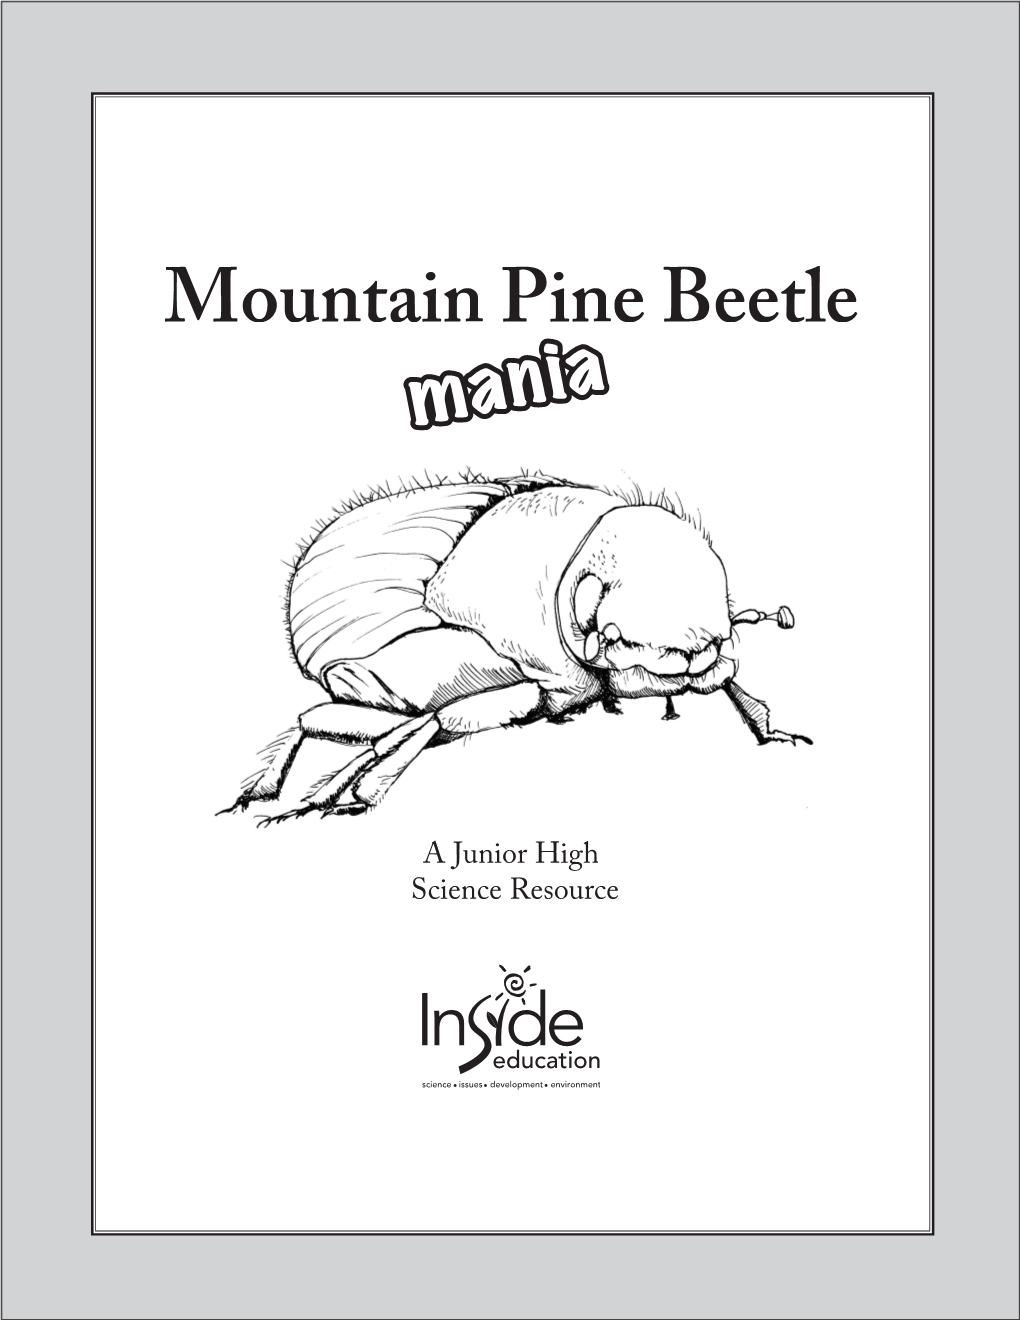 Mountain Pine Beetle Mania